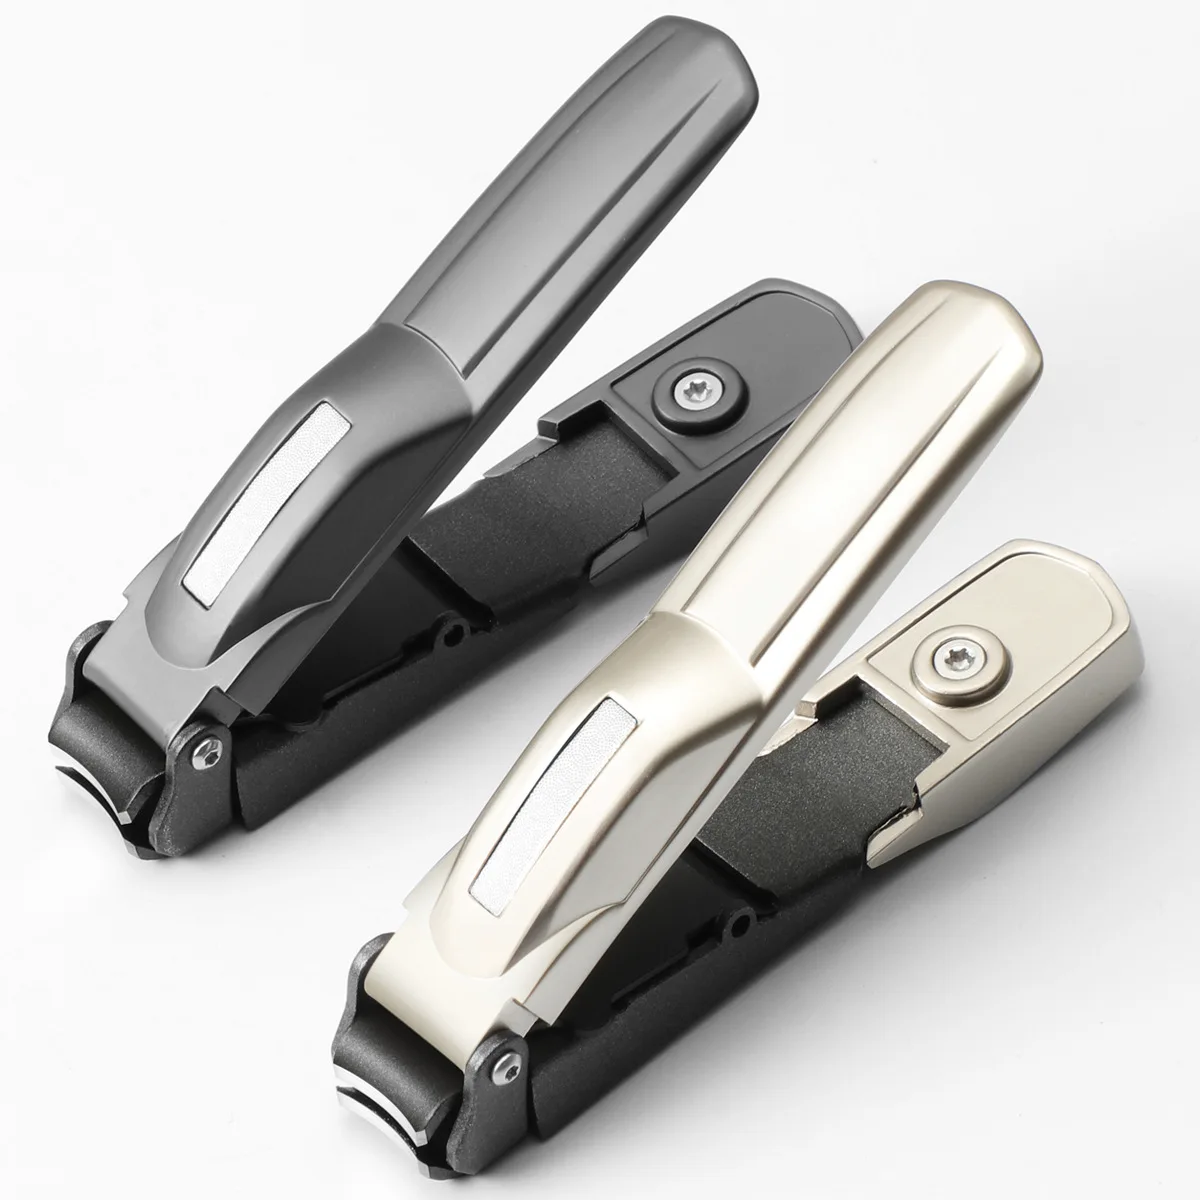 Bionics Design Stainless Steel Nail Clippers Nail Trimmer Pedicure ScissorAnti Splash Fingernail Cutter Manicure Tools enlarge